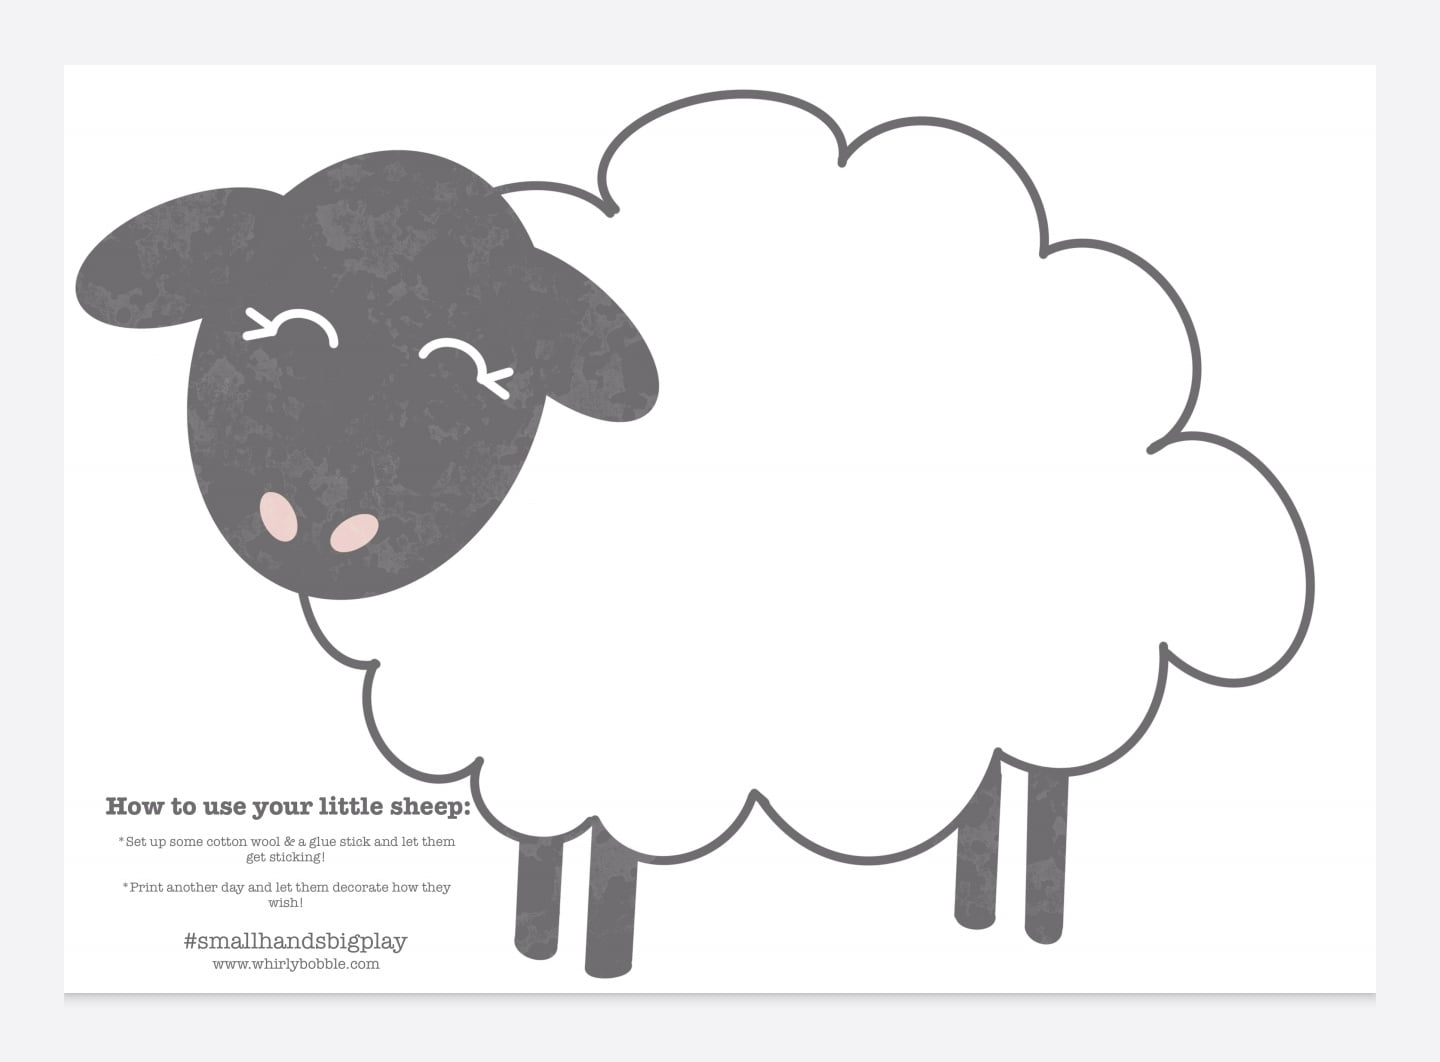 Sheep Sticking Activity FREE PRINTABLE Whirlybobble Parenting Lifestyle Blog